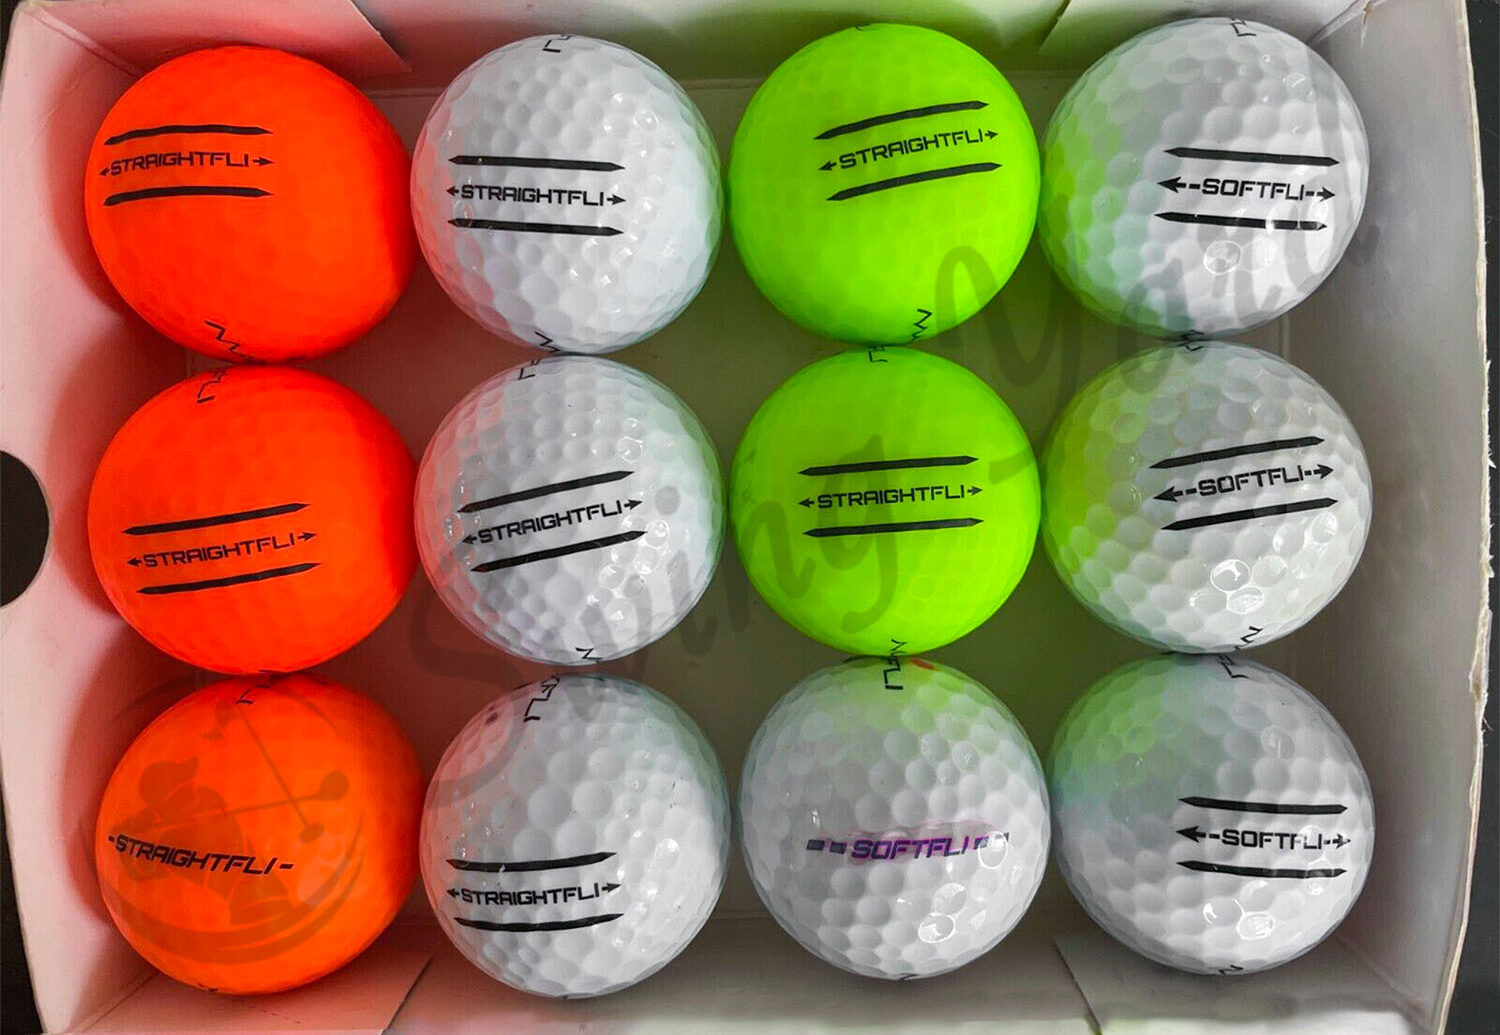 The Maxfli StraightFli golf balls inside the box